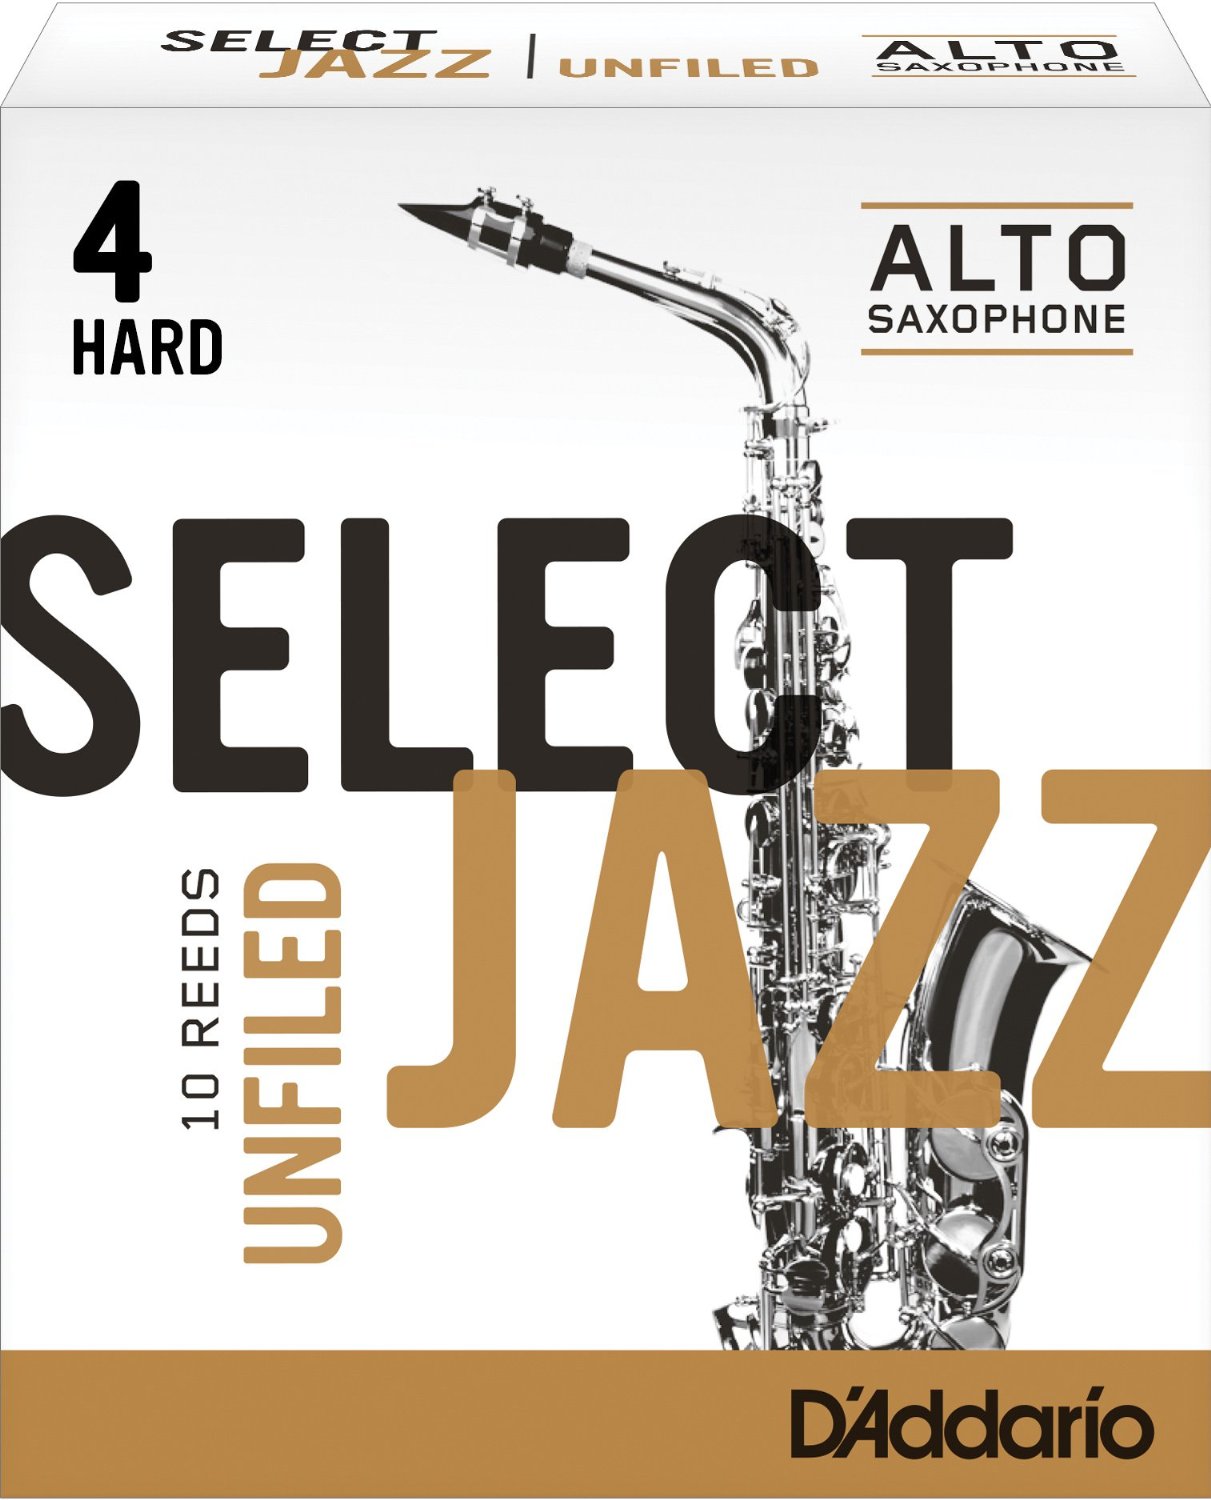 D'addario Select Jazz Unfiled Eb Alto Saz Reeds 10ct 4 H Strength